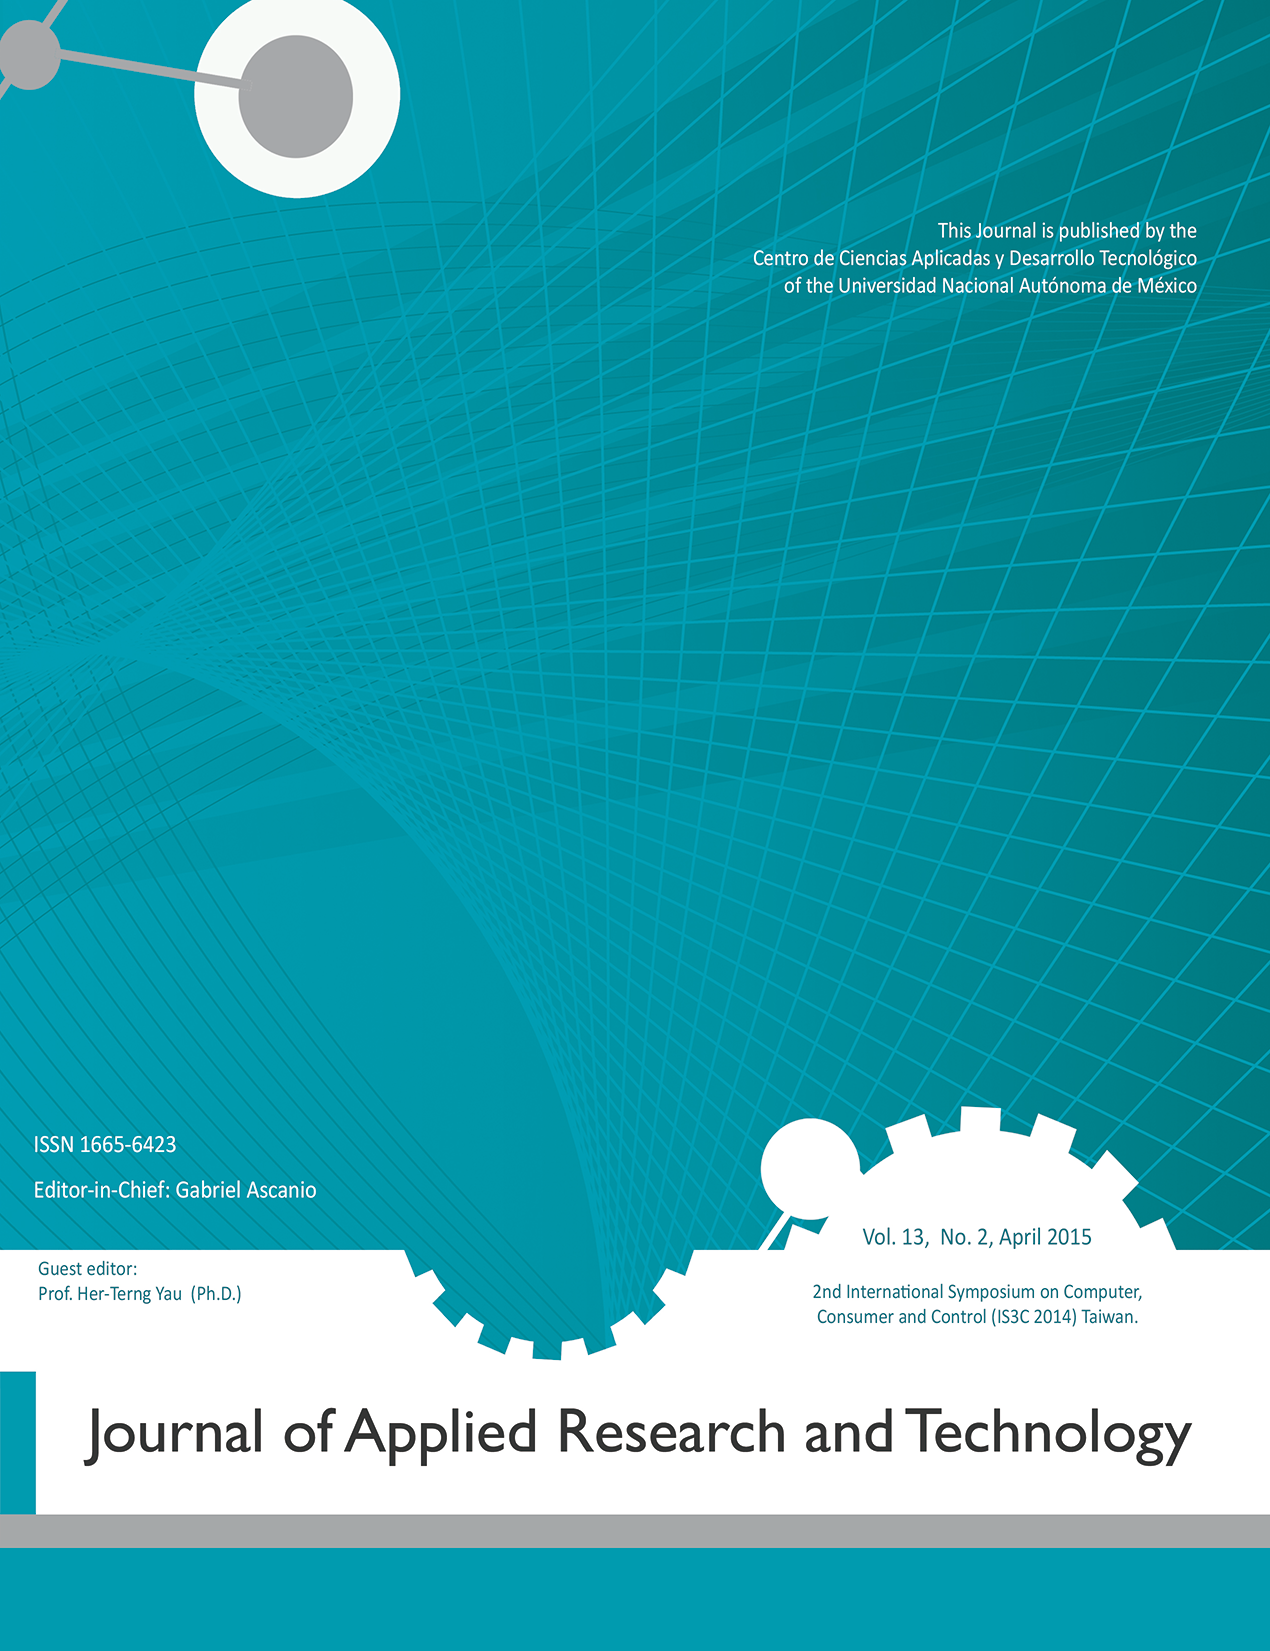 Ra Journal of applied research. Международный журнал прикладных